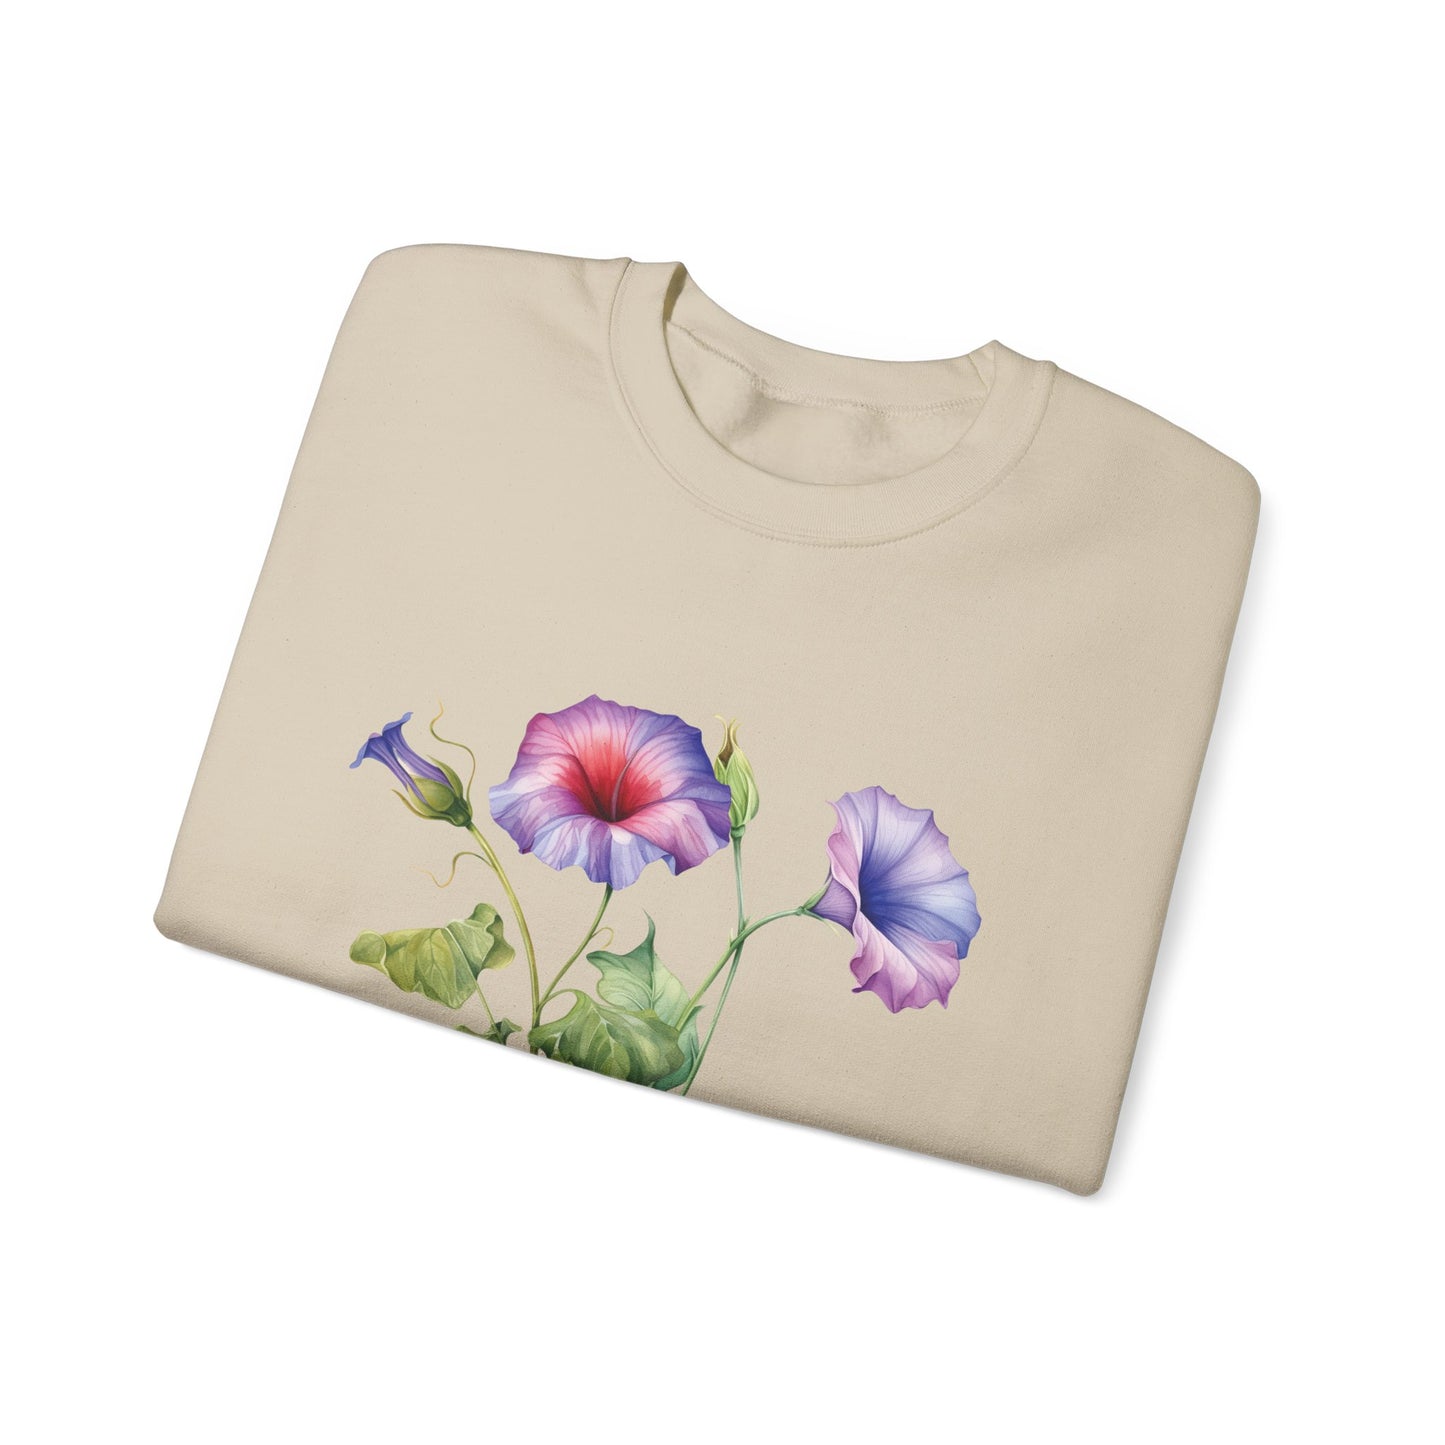 September Birth Flower (Morning Glory) - Unisex Heavy Blend™ Crewneck Sweatshirt